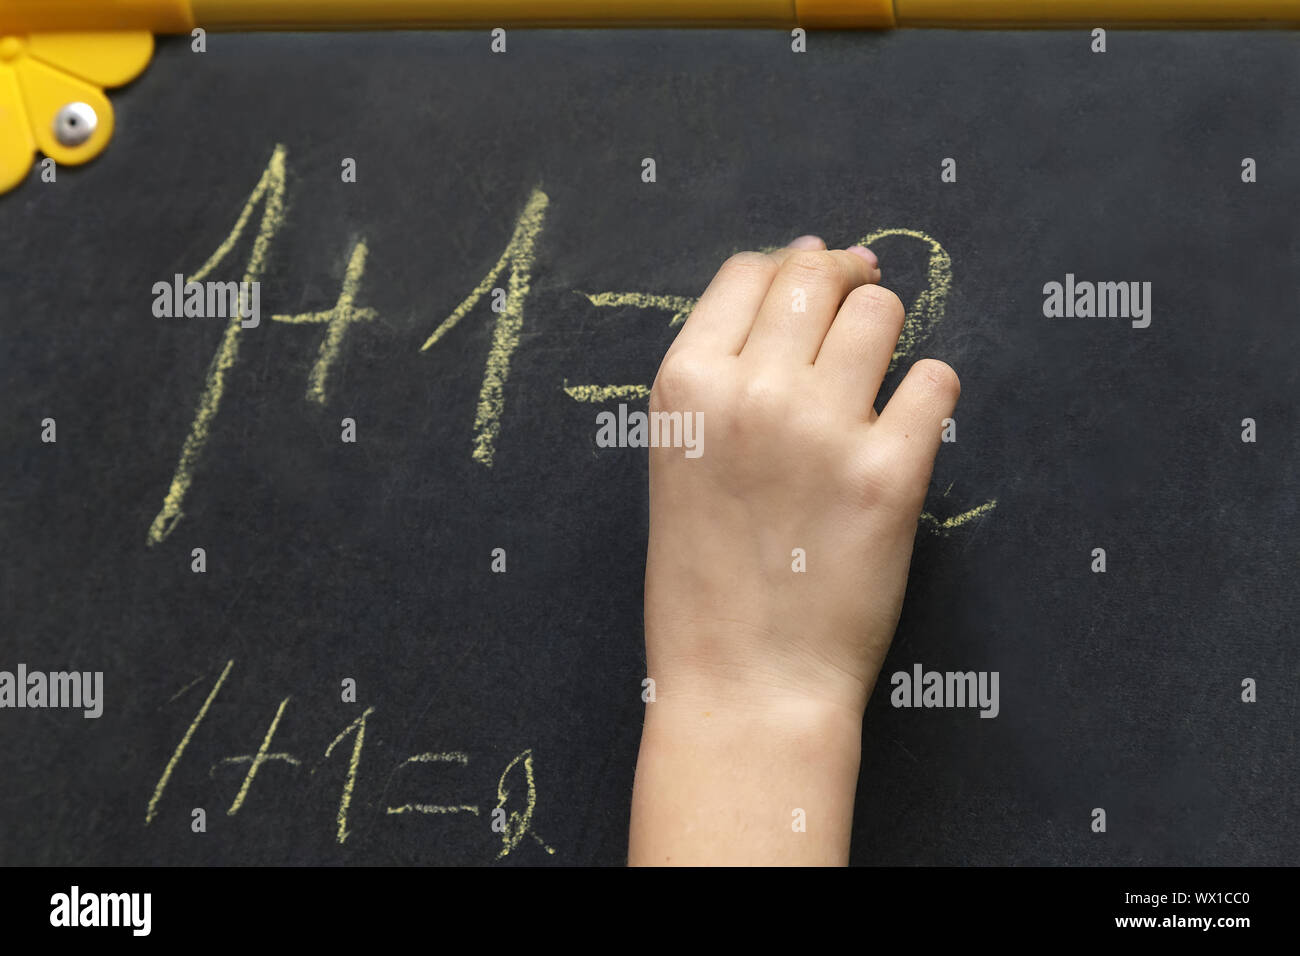 The girl writes in chalk on the blackboard. Stock Photo